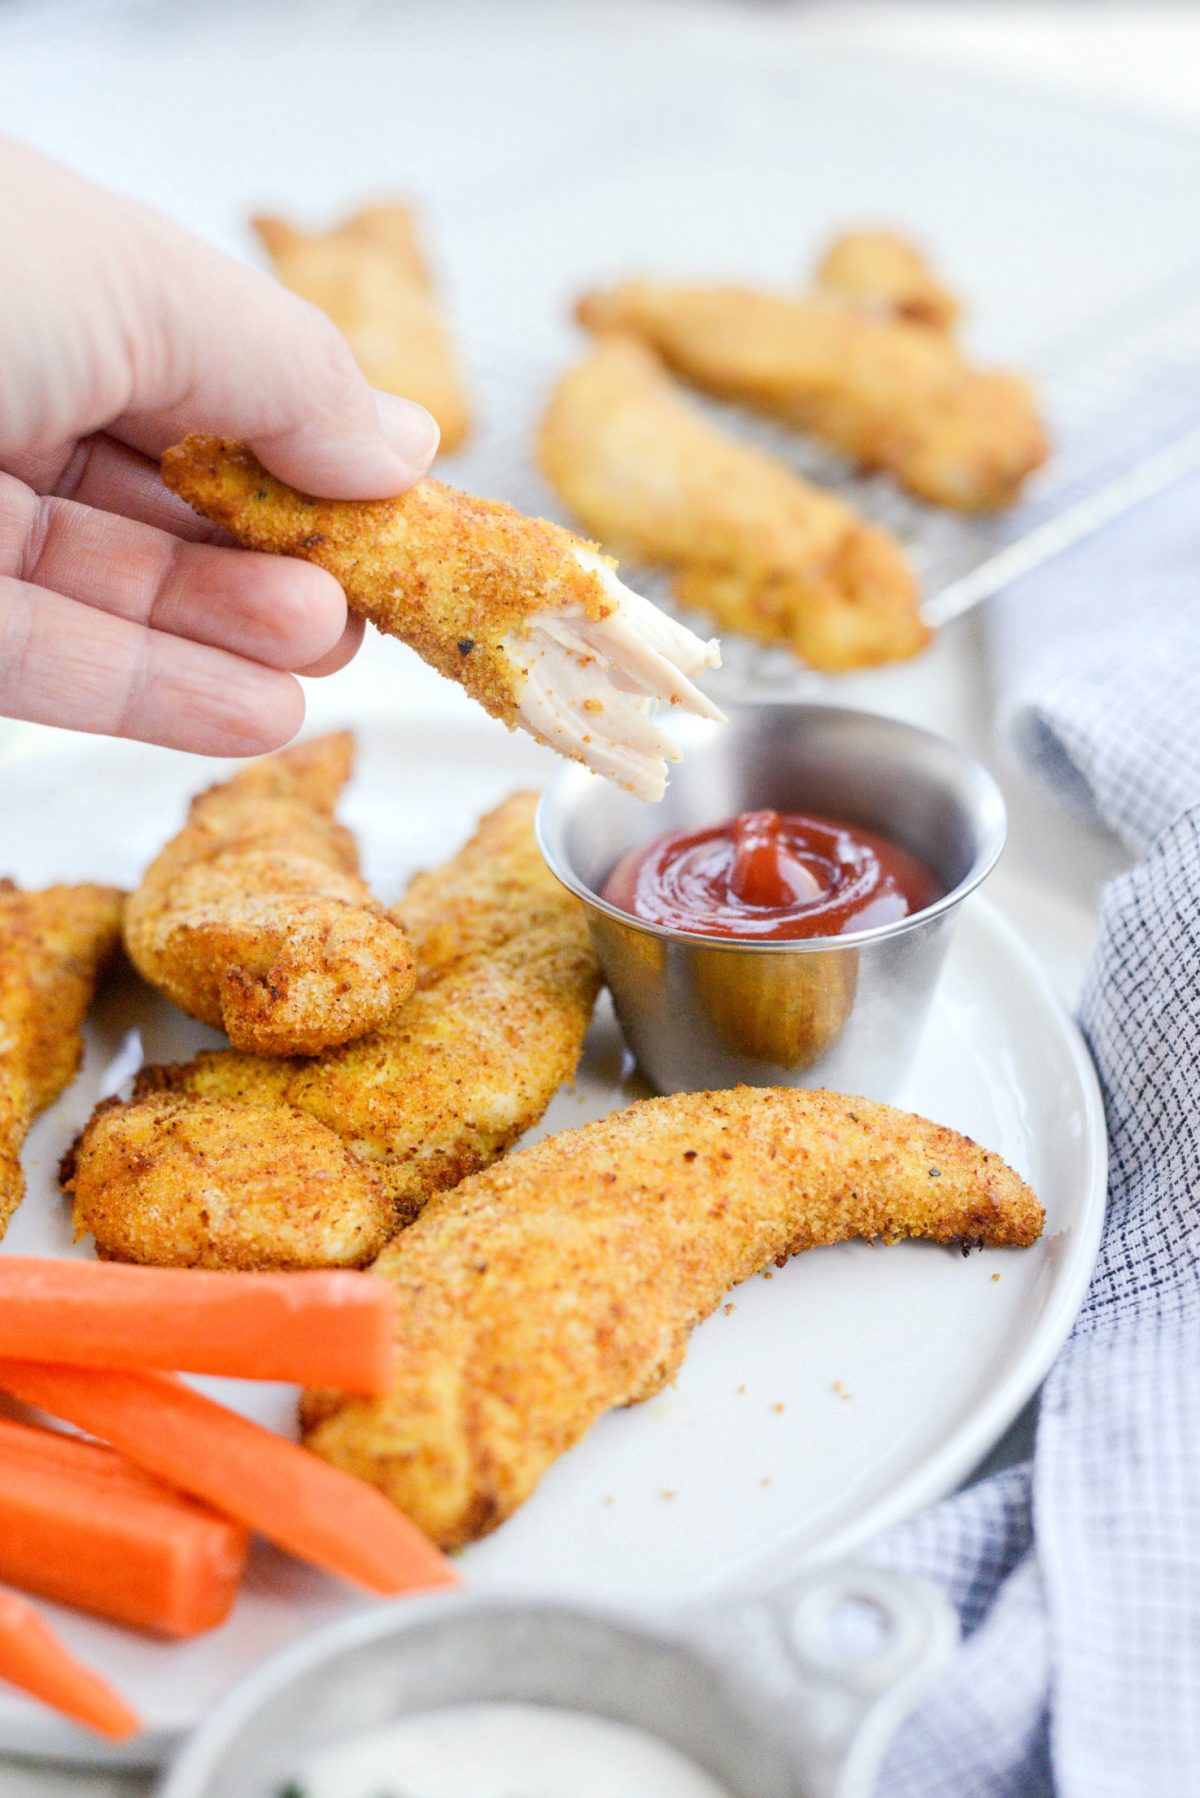 Air Fried Chicken Tenders No Breading - Recipe: Air Fryer Keto Chicken ...